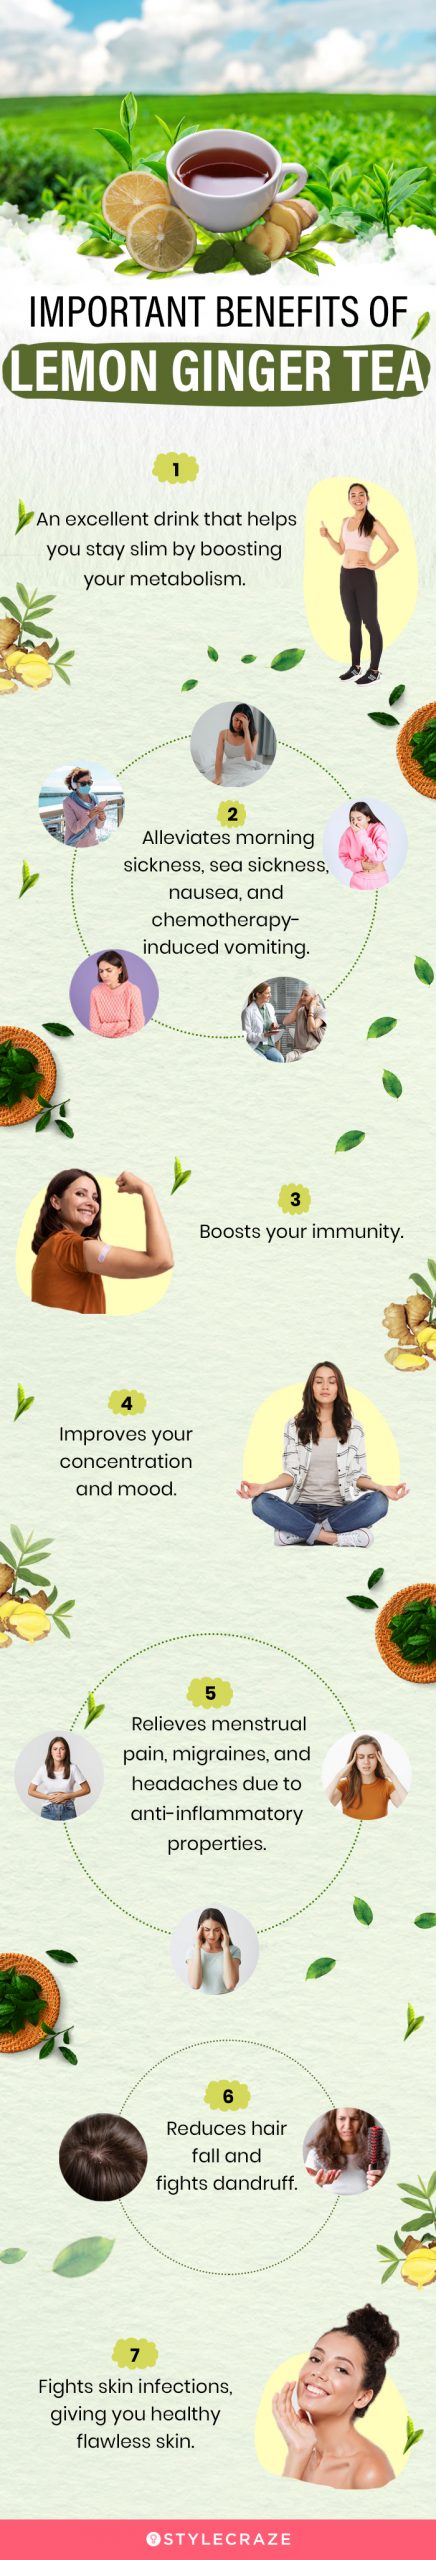 important benefits of lemon ginger tea (infographic)